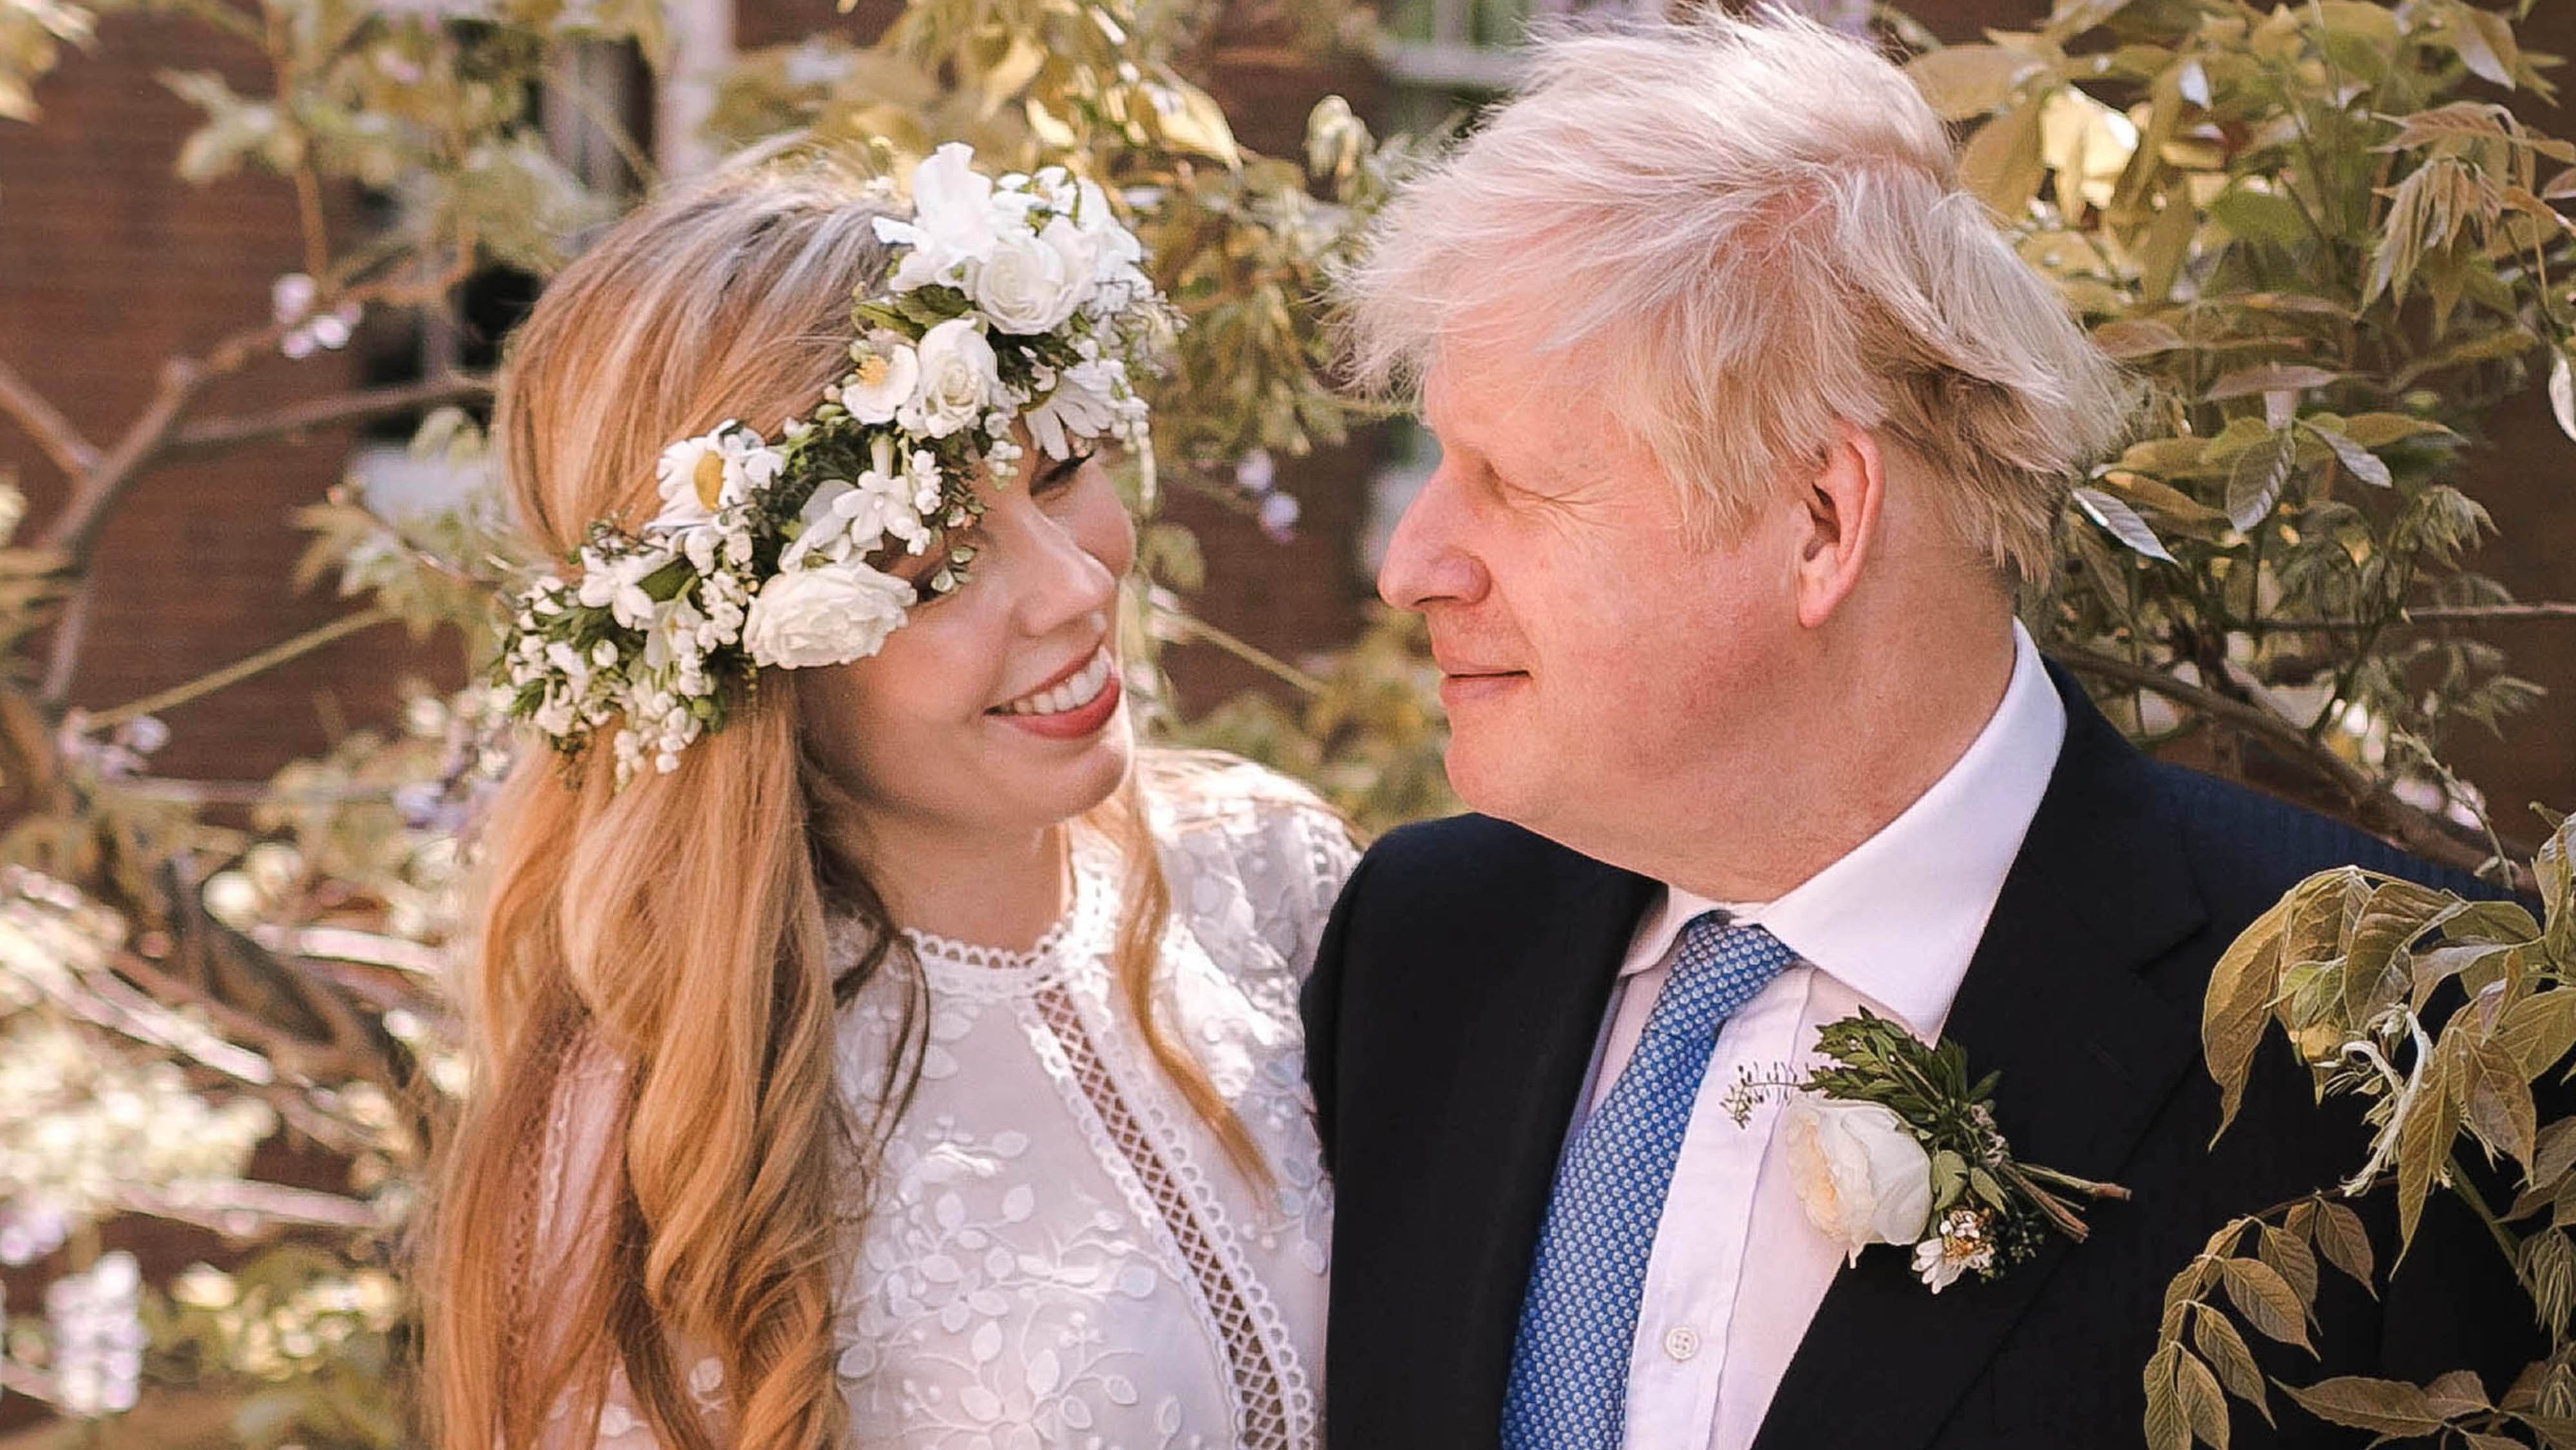 Prime Minister Boris Johnson Marries Fiancee Carrie Symonds